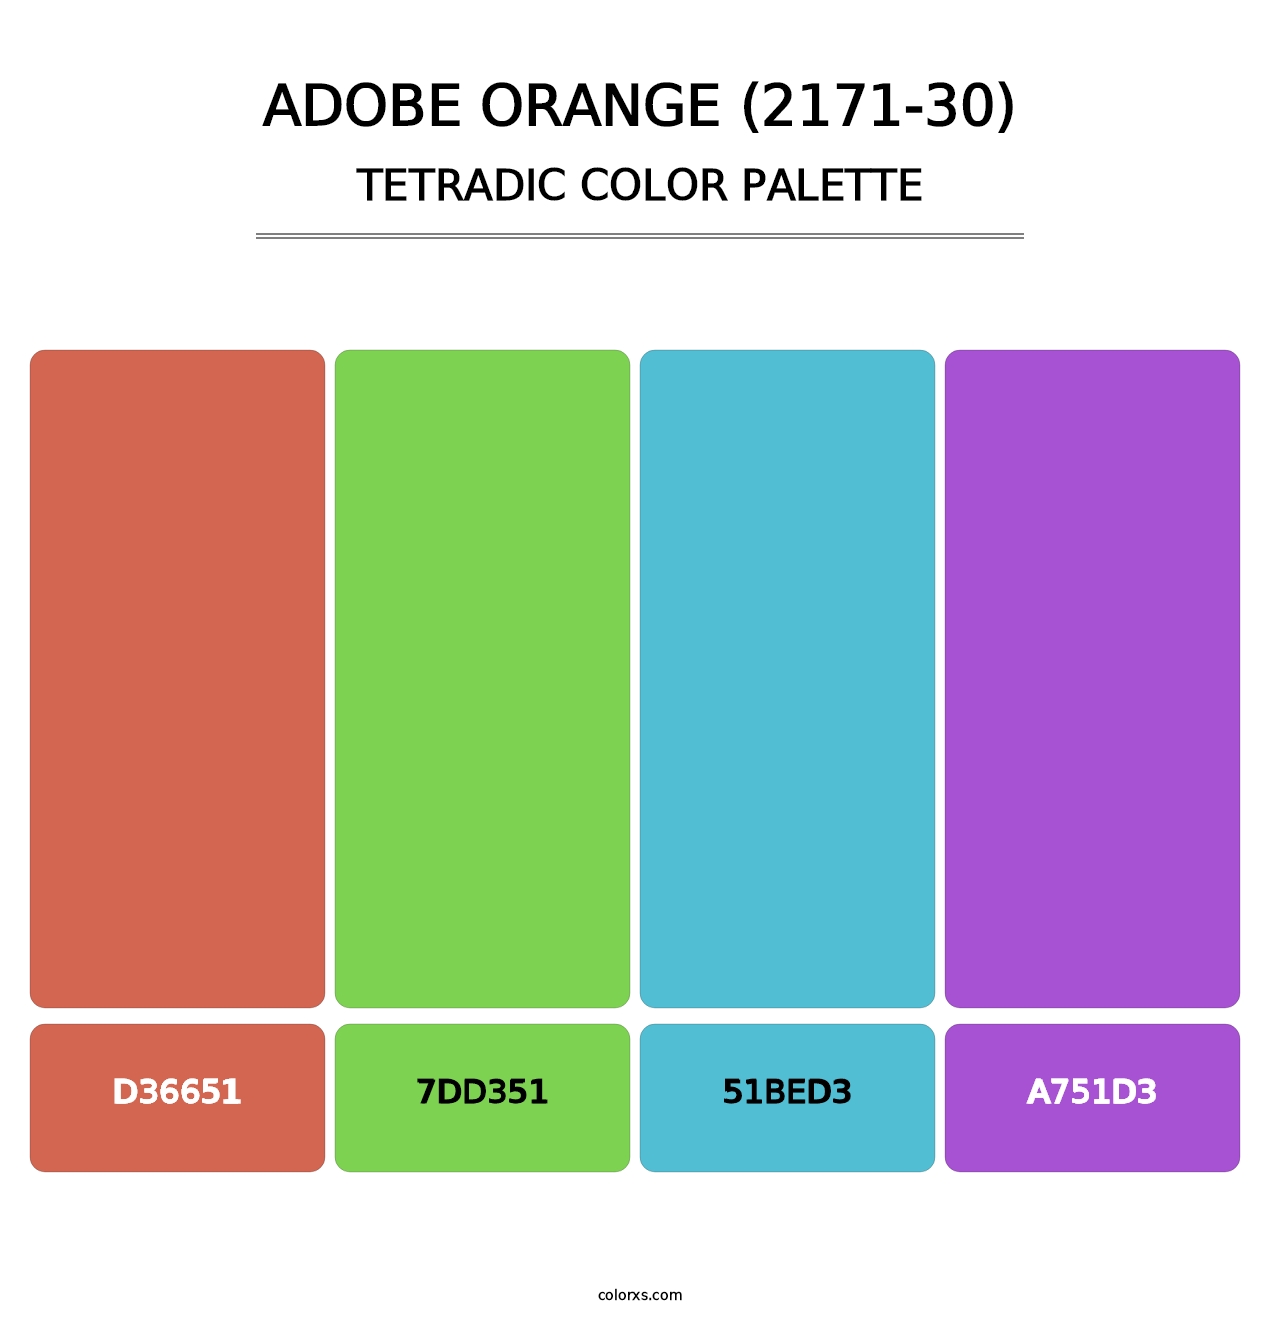 Adobe Orange (2171-30) - Tetradic Color Palette